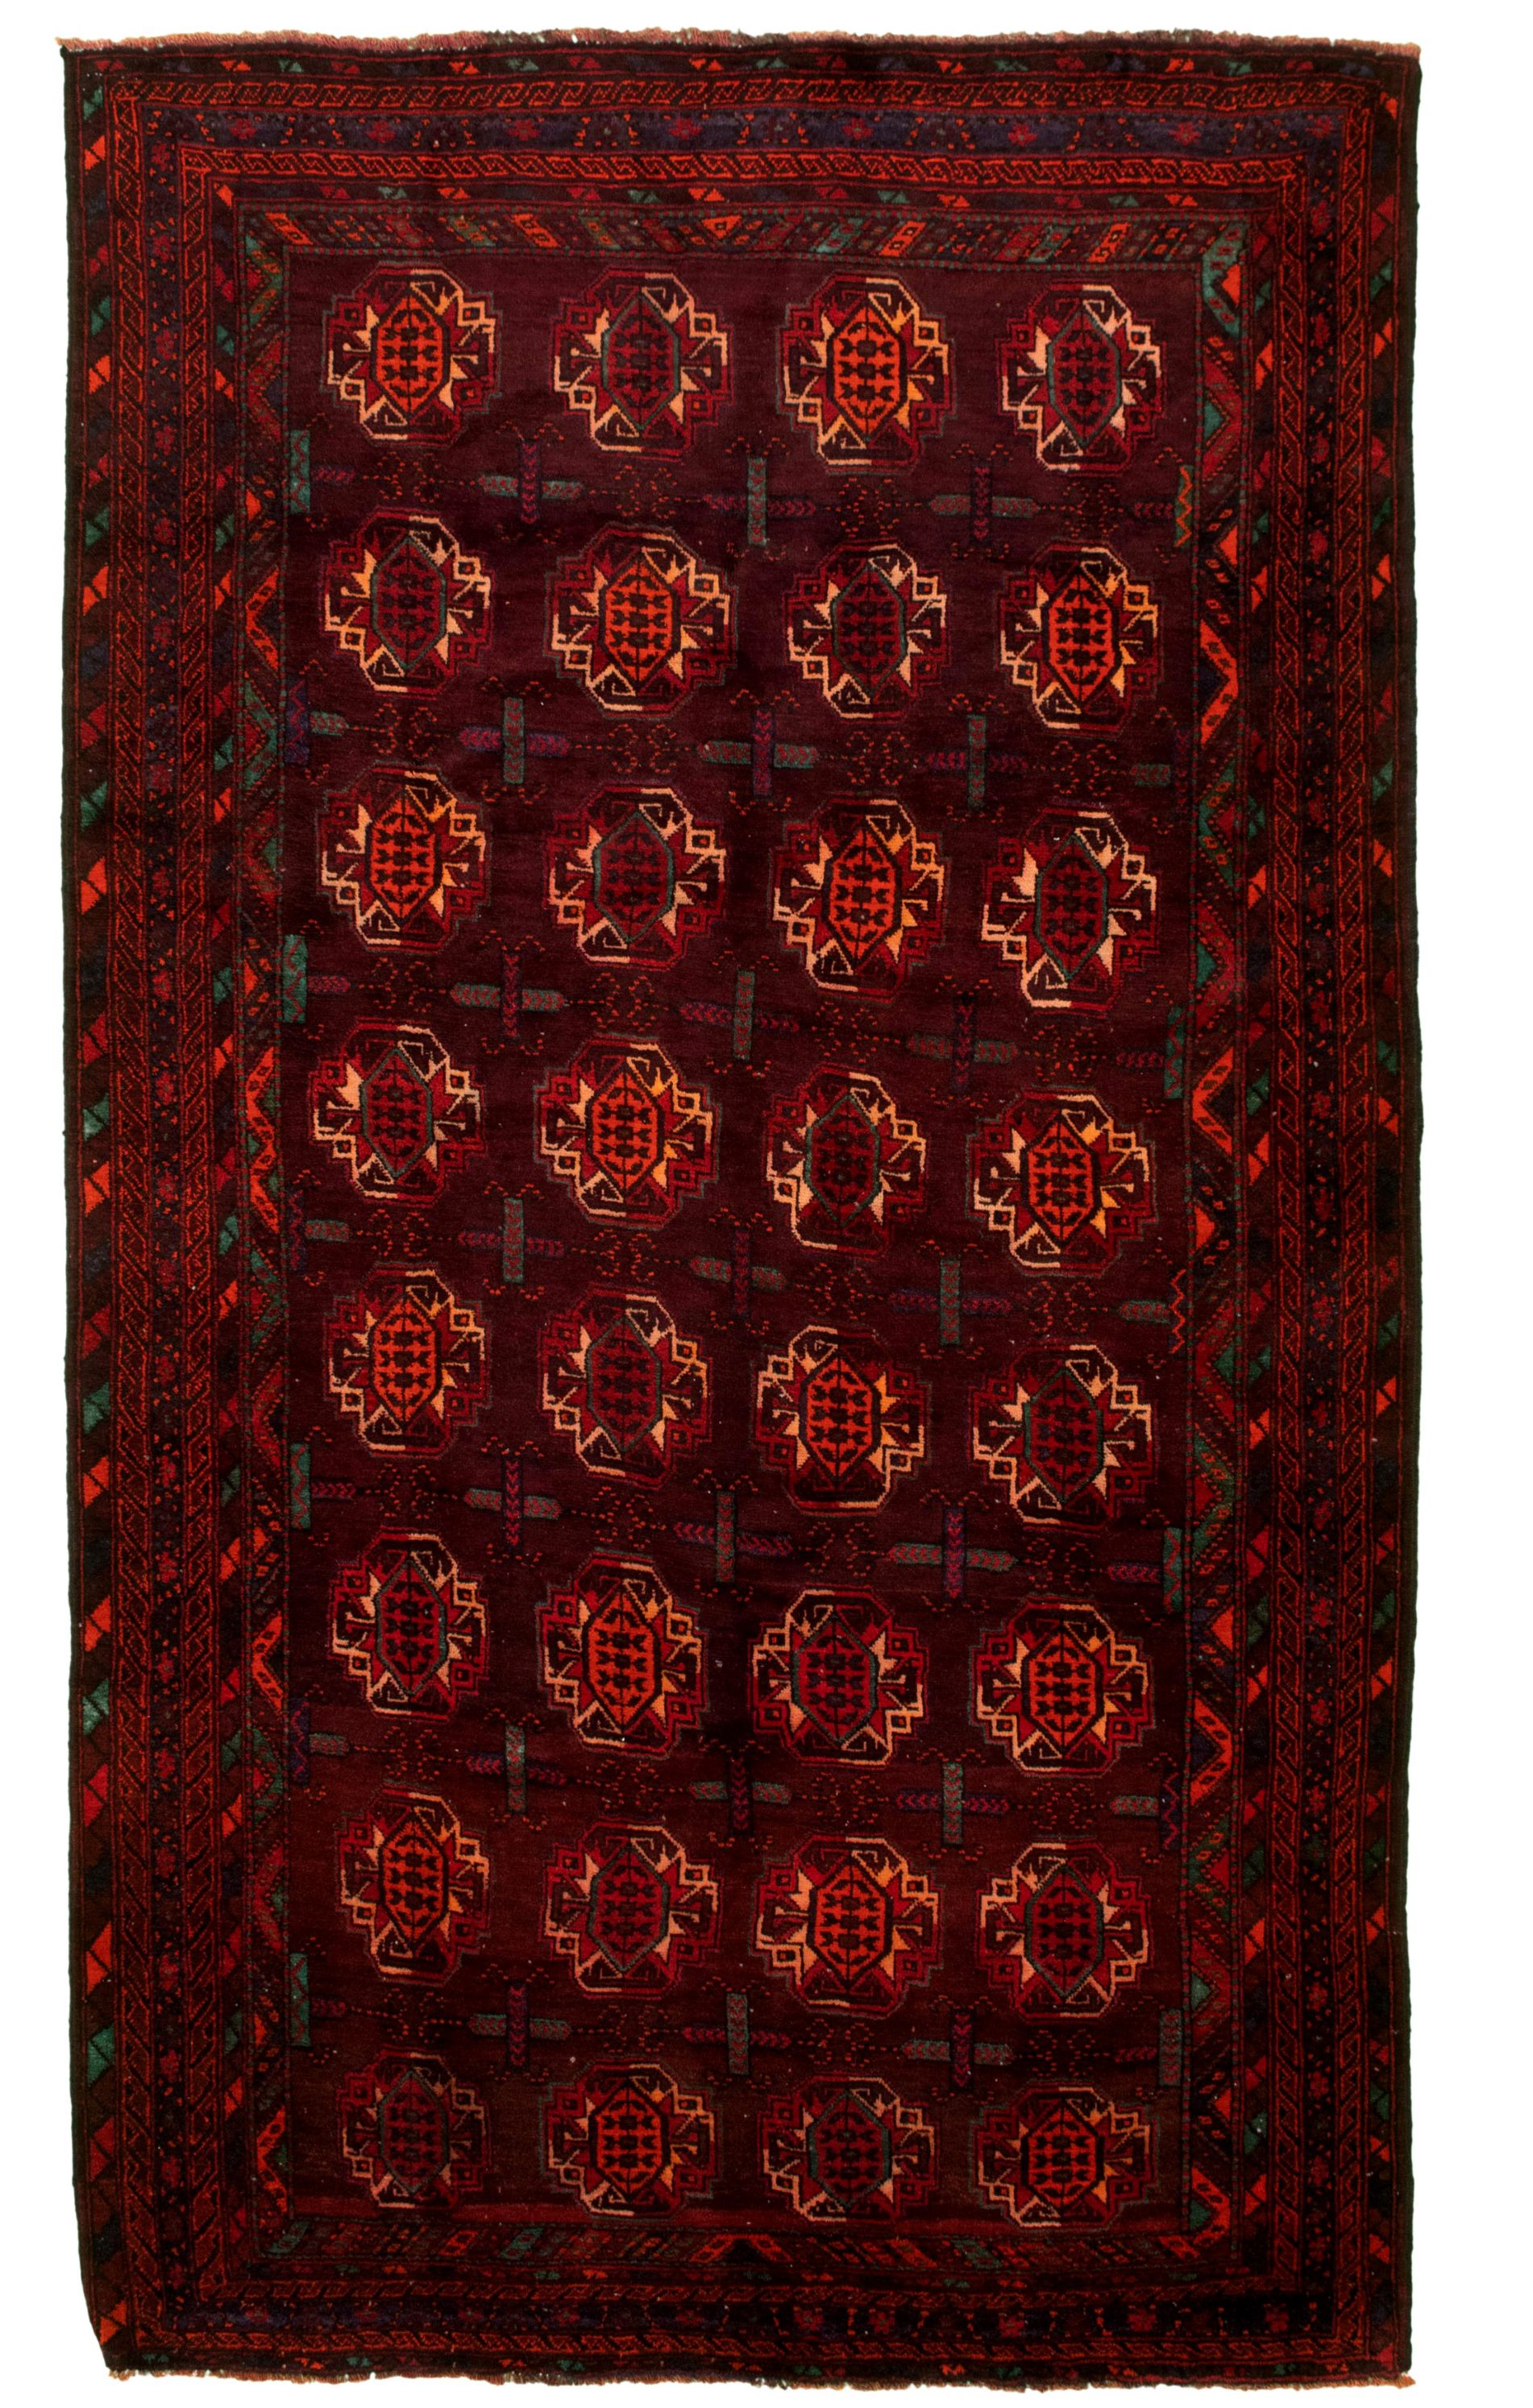 Hand-knotted Authentic Turkish Dark Burgundy Wool Rug 5'8" x 9'7" Size: 5'8" x 9'7"  